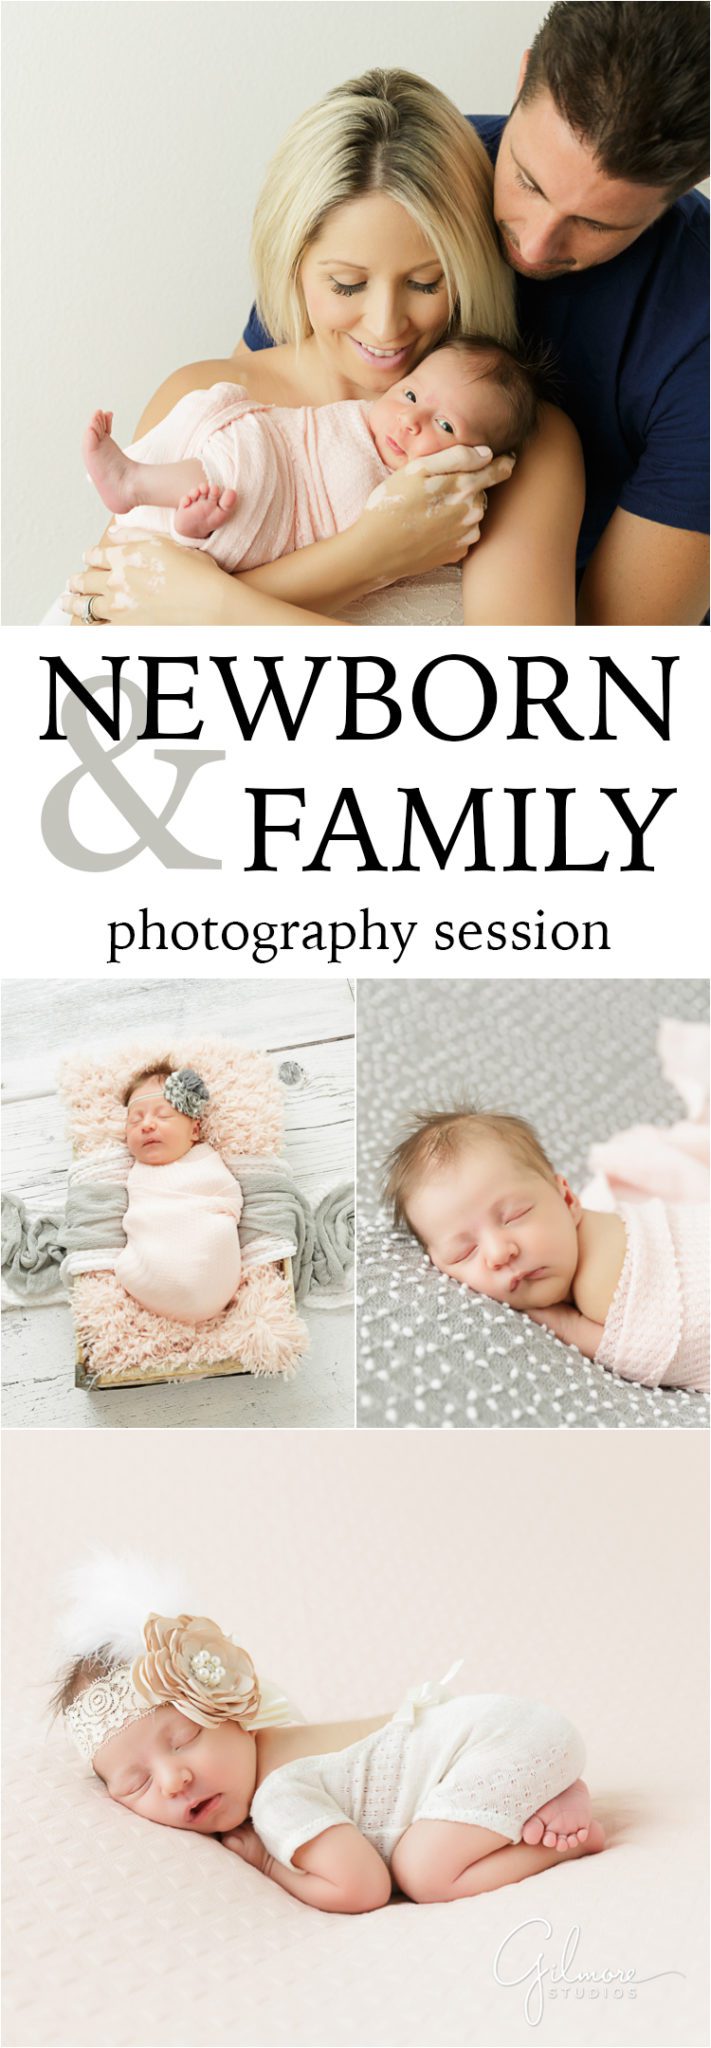 Newborn-family-portrait-photography-studio